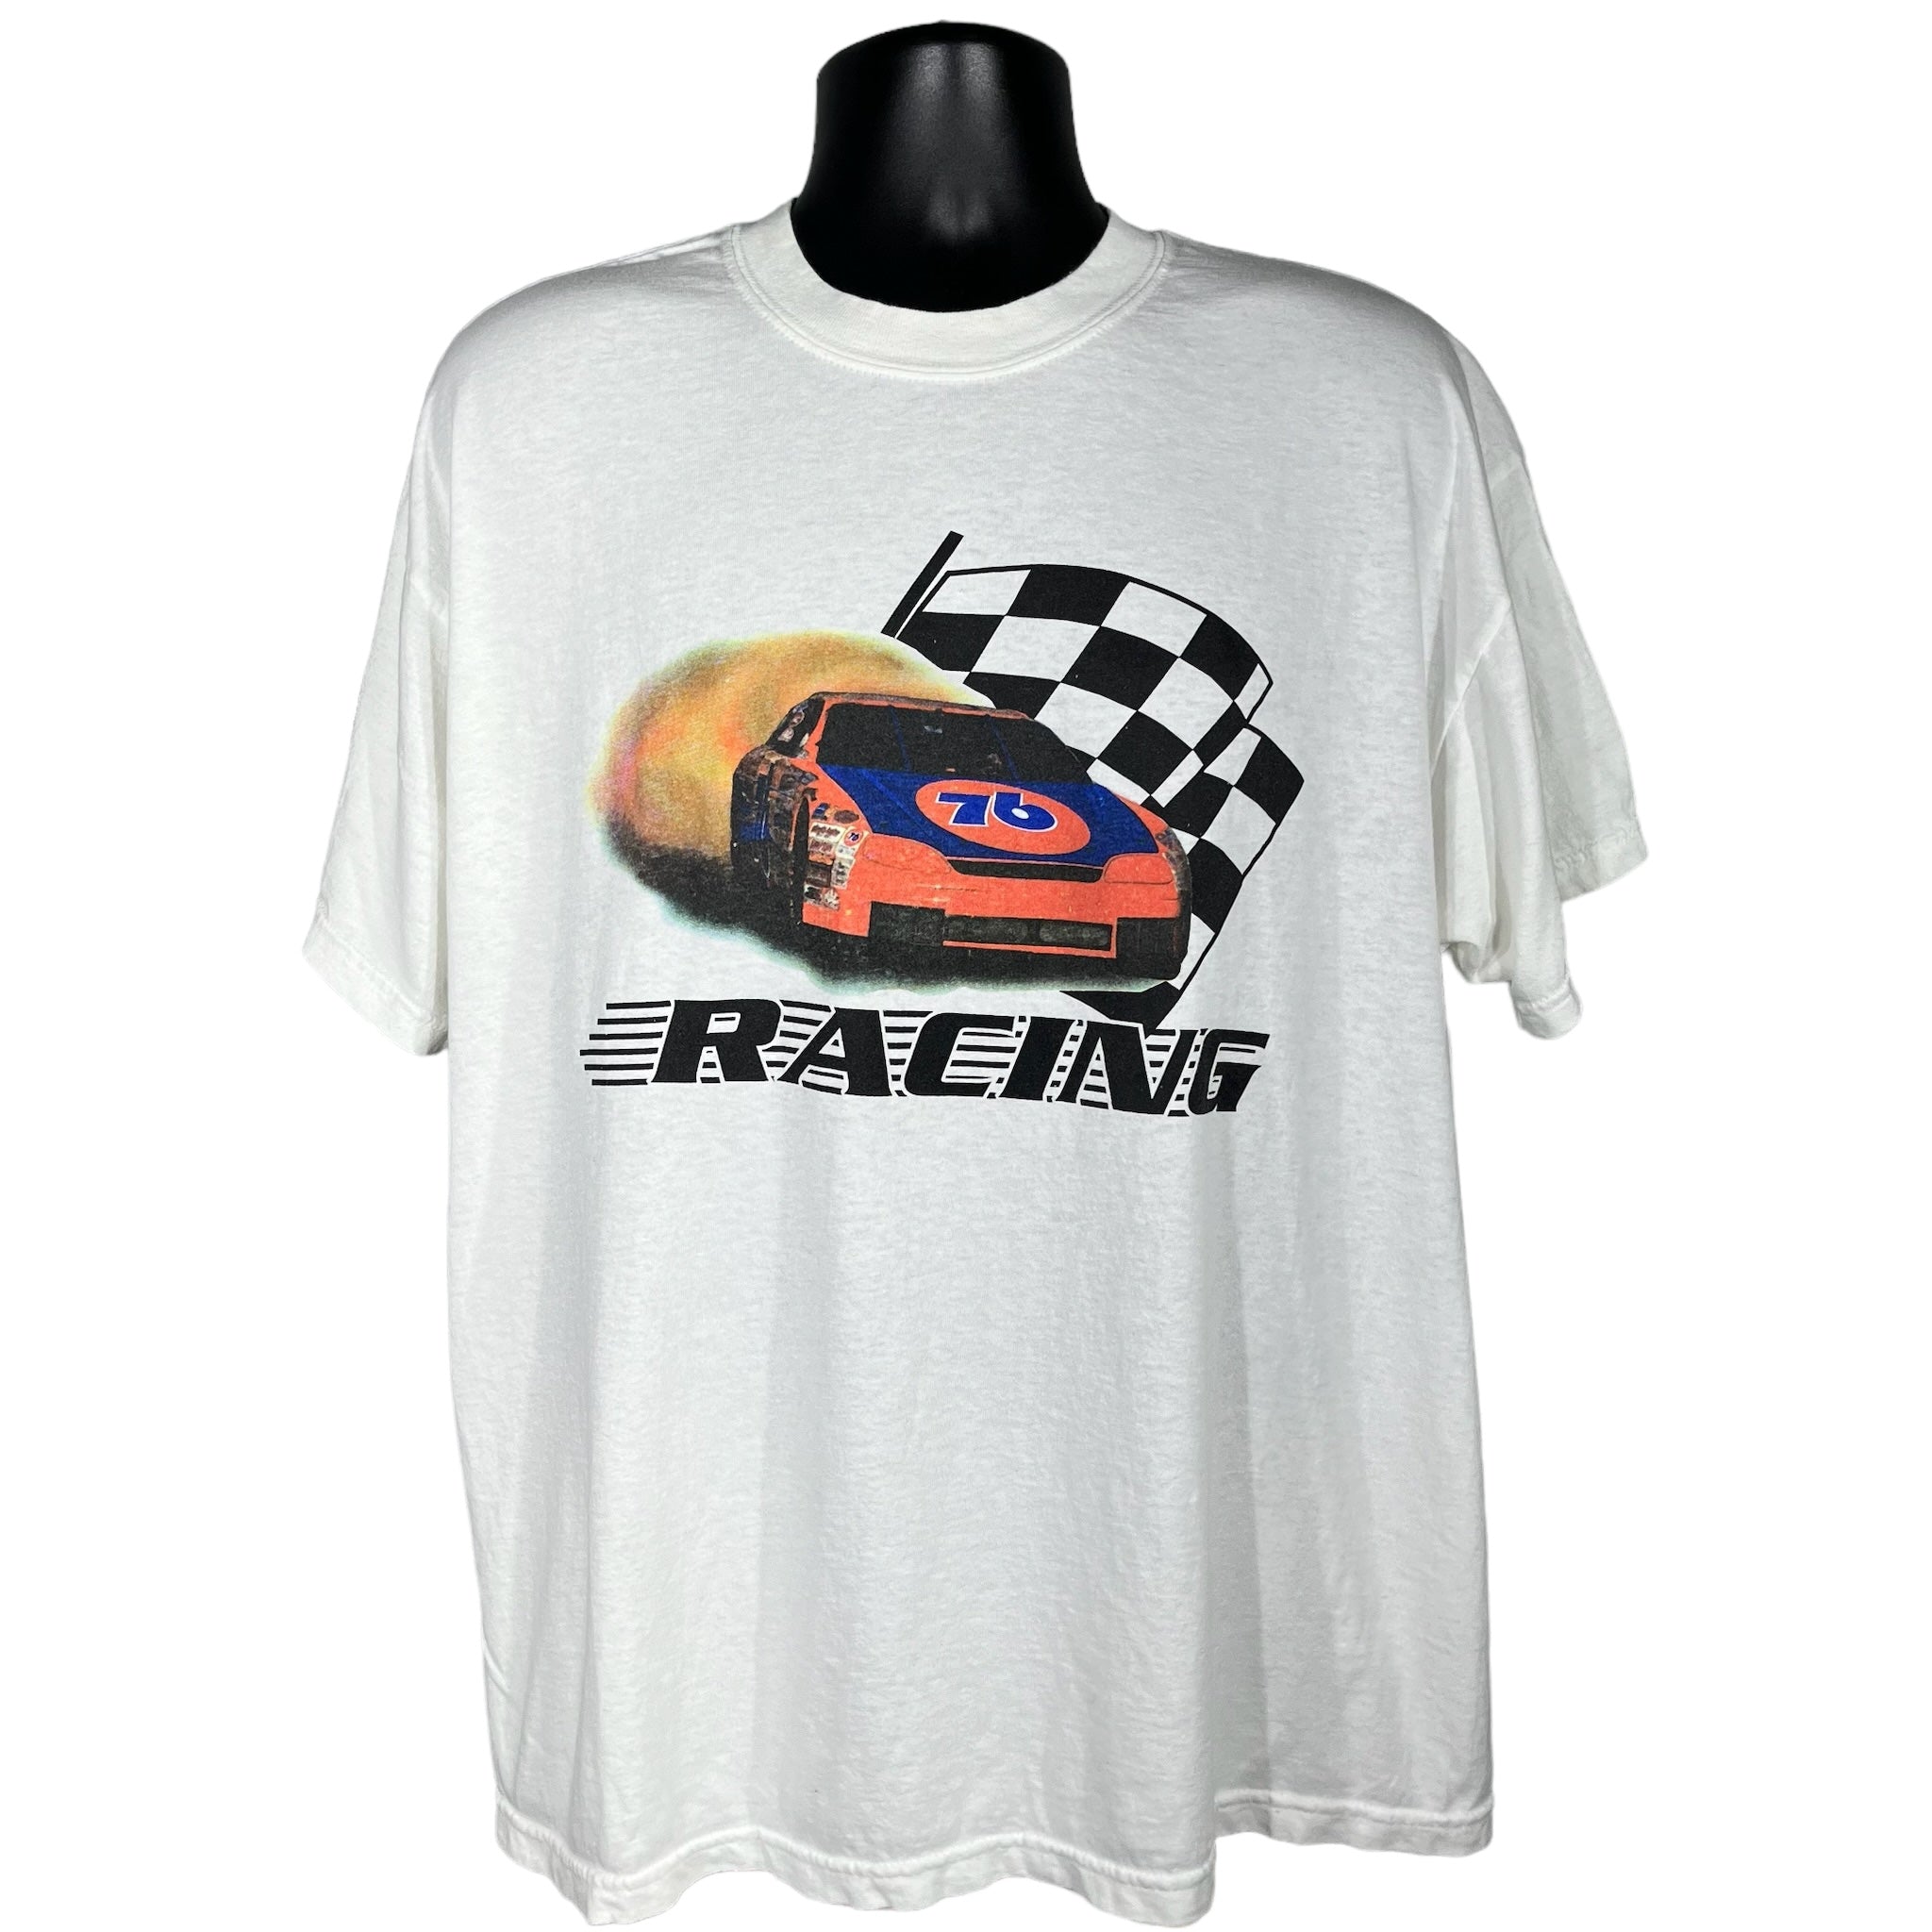 Vintage NASCAR 76 Racing Tee 2000s